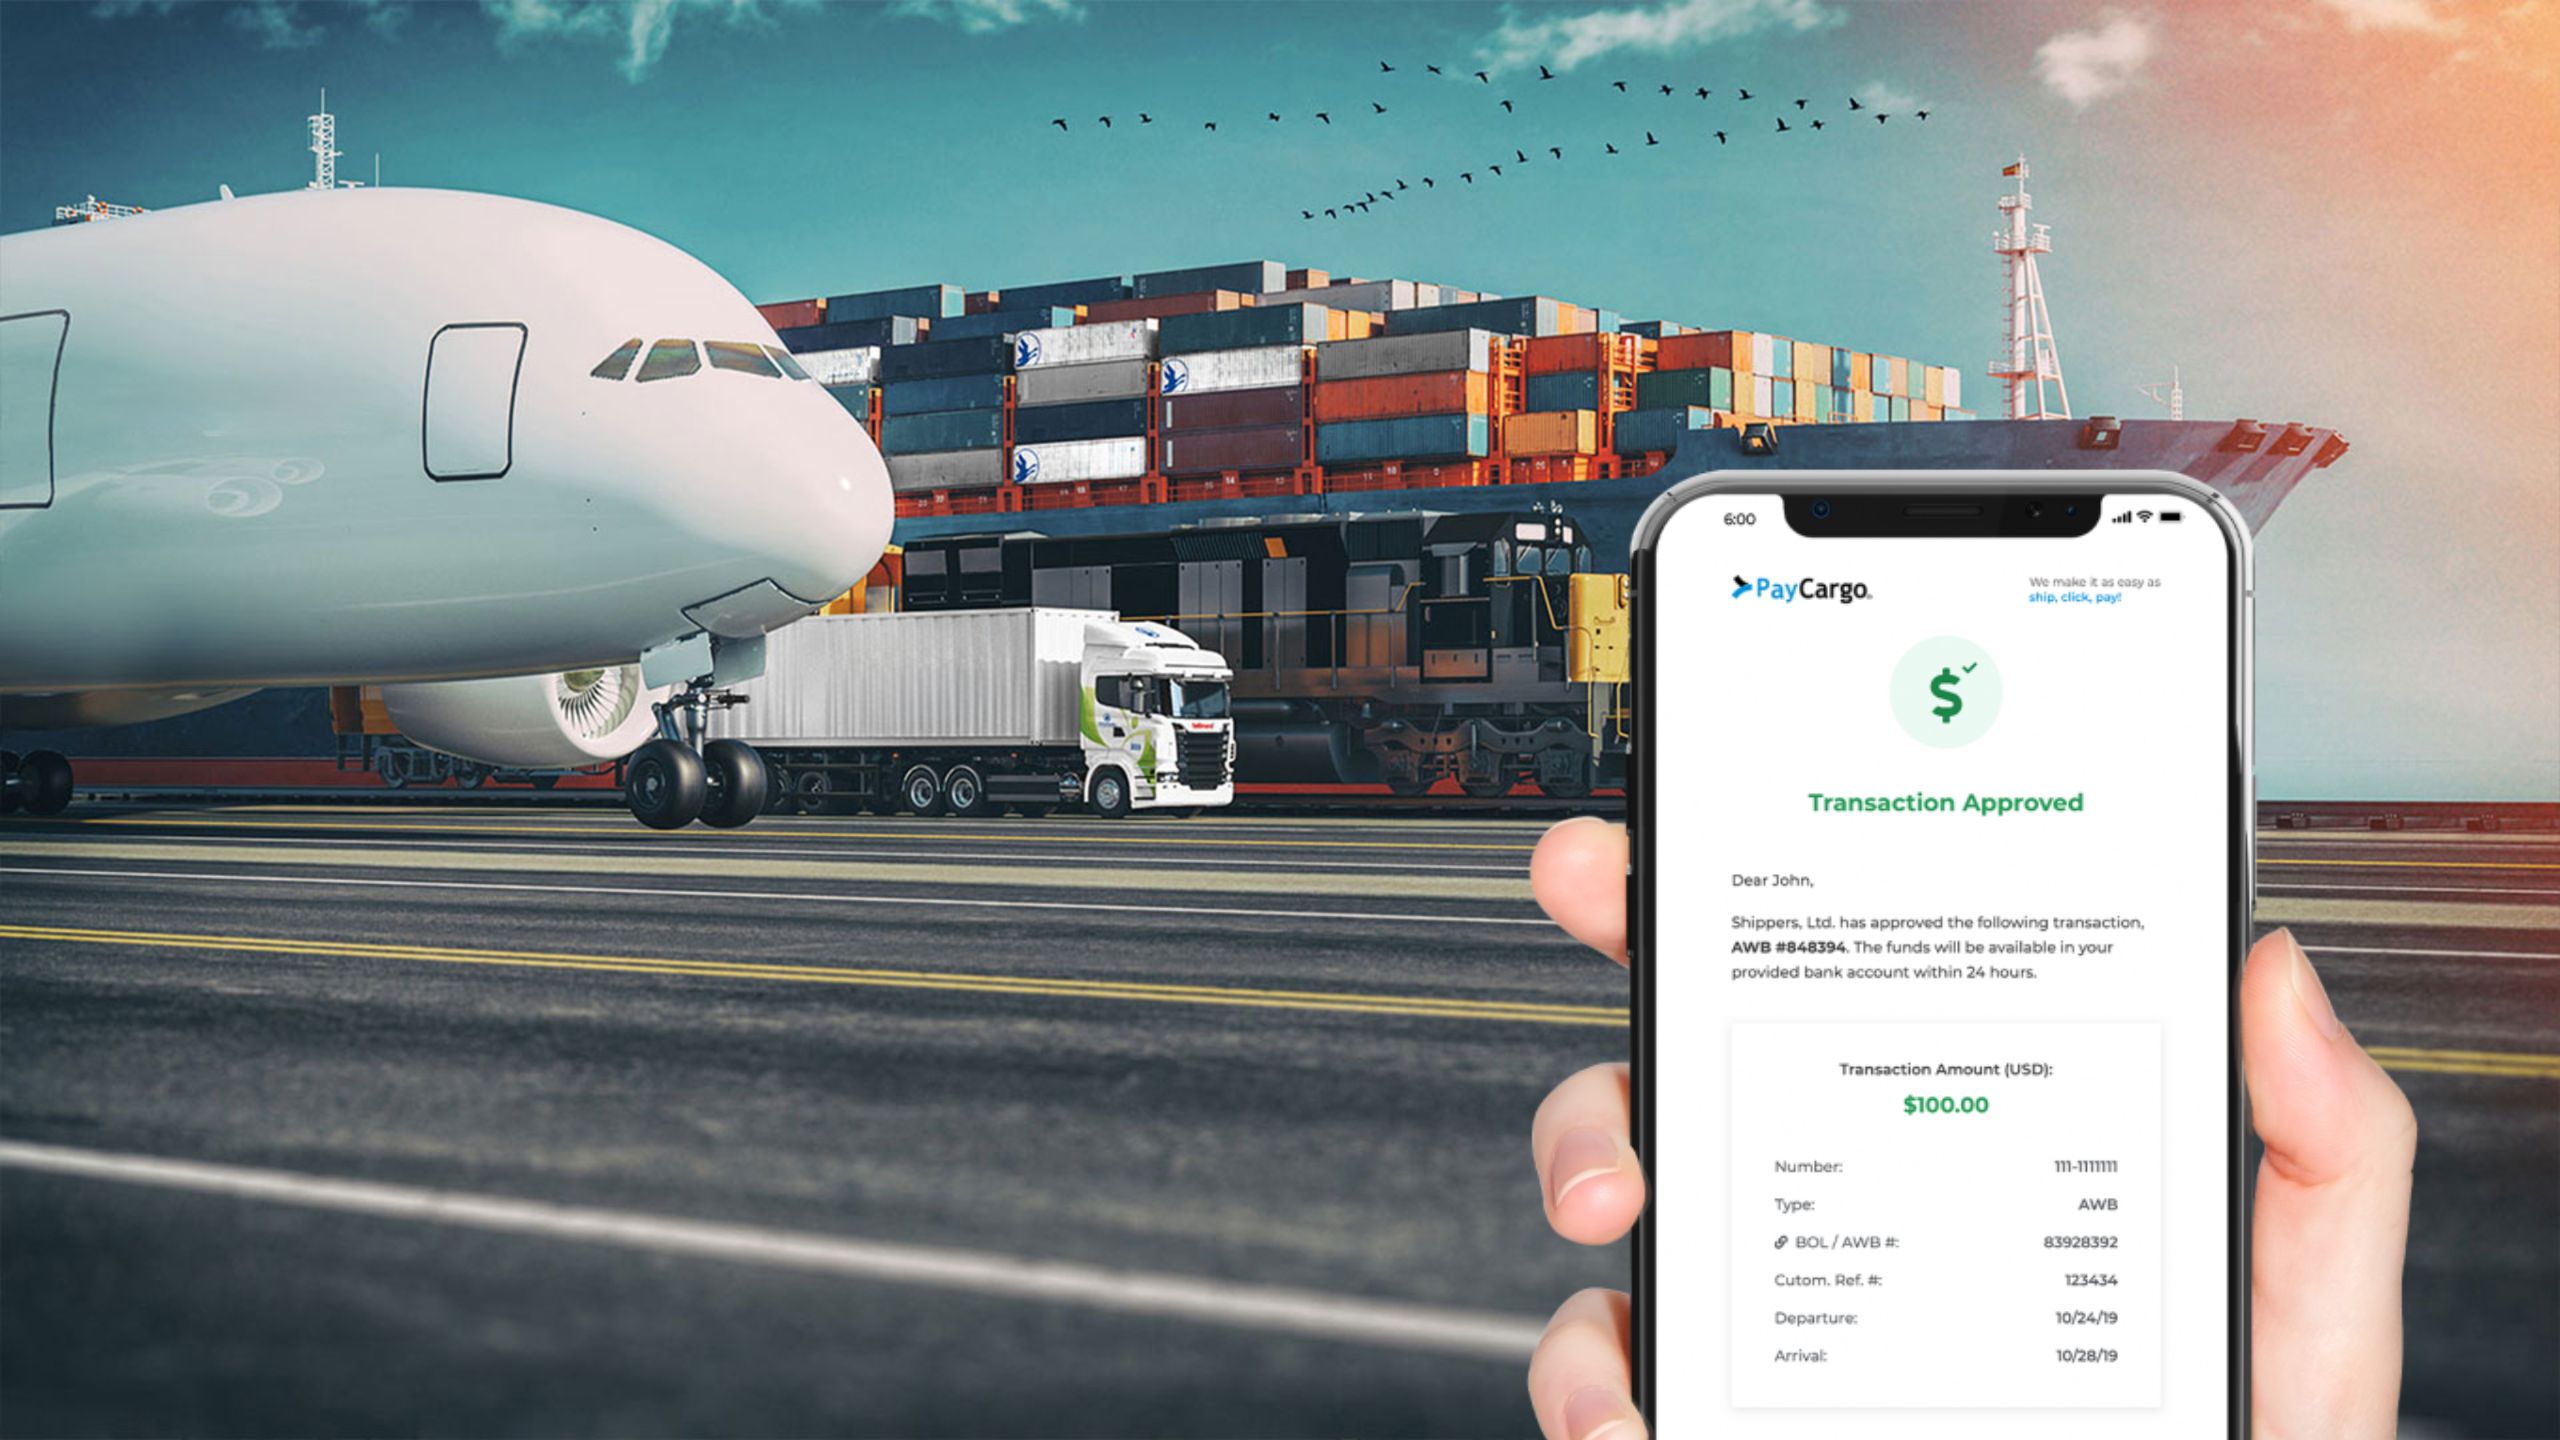 PayCargo: New Logistics Payment Platform Driving Smart Logistics